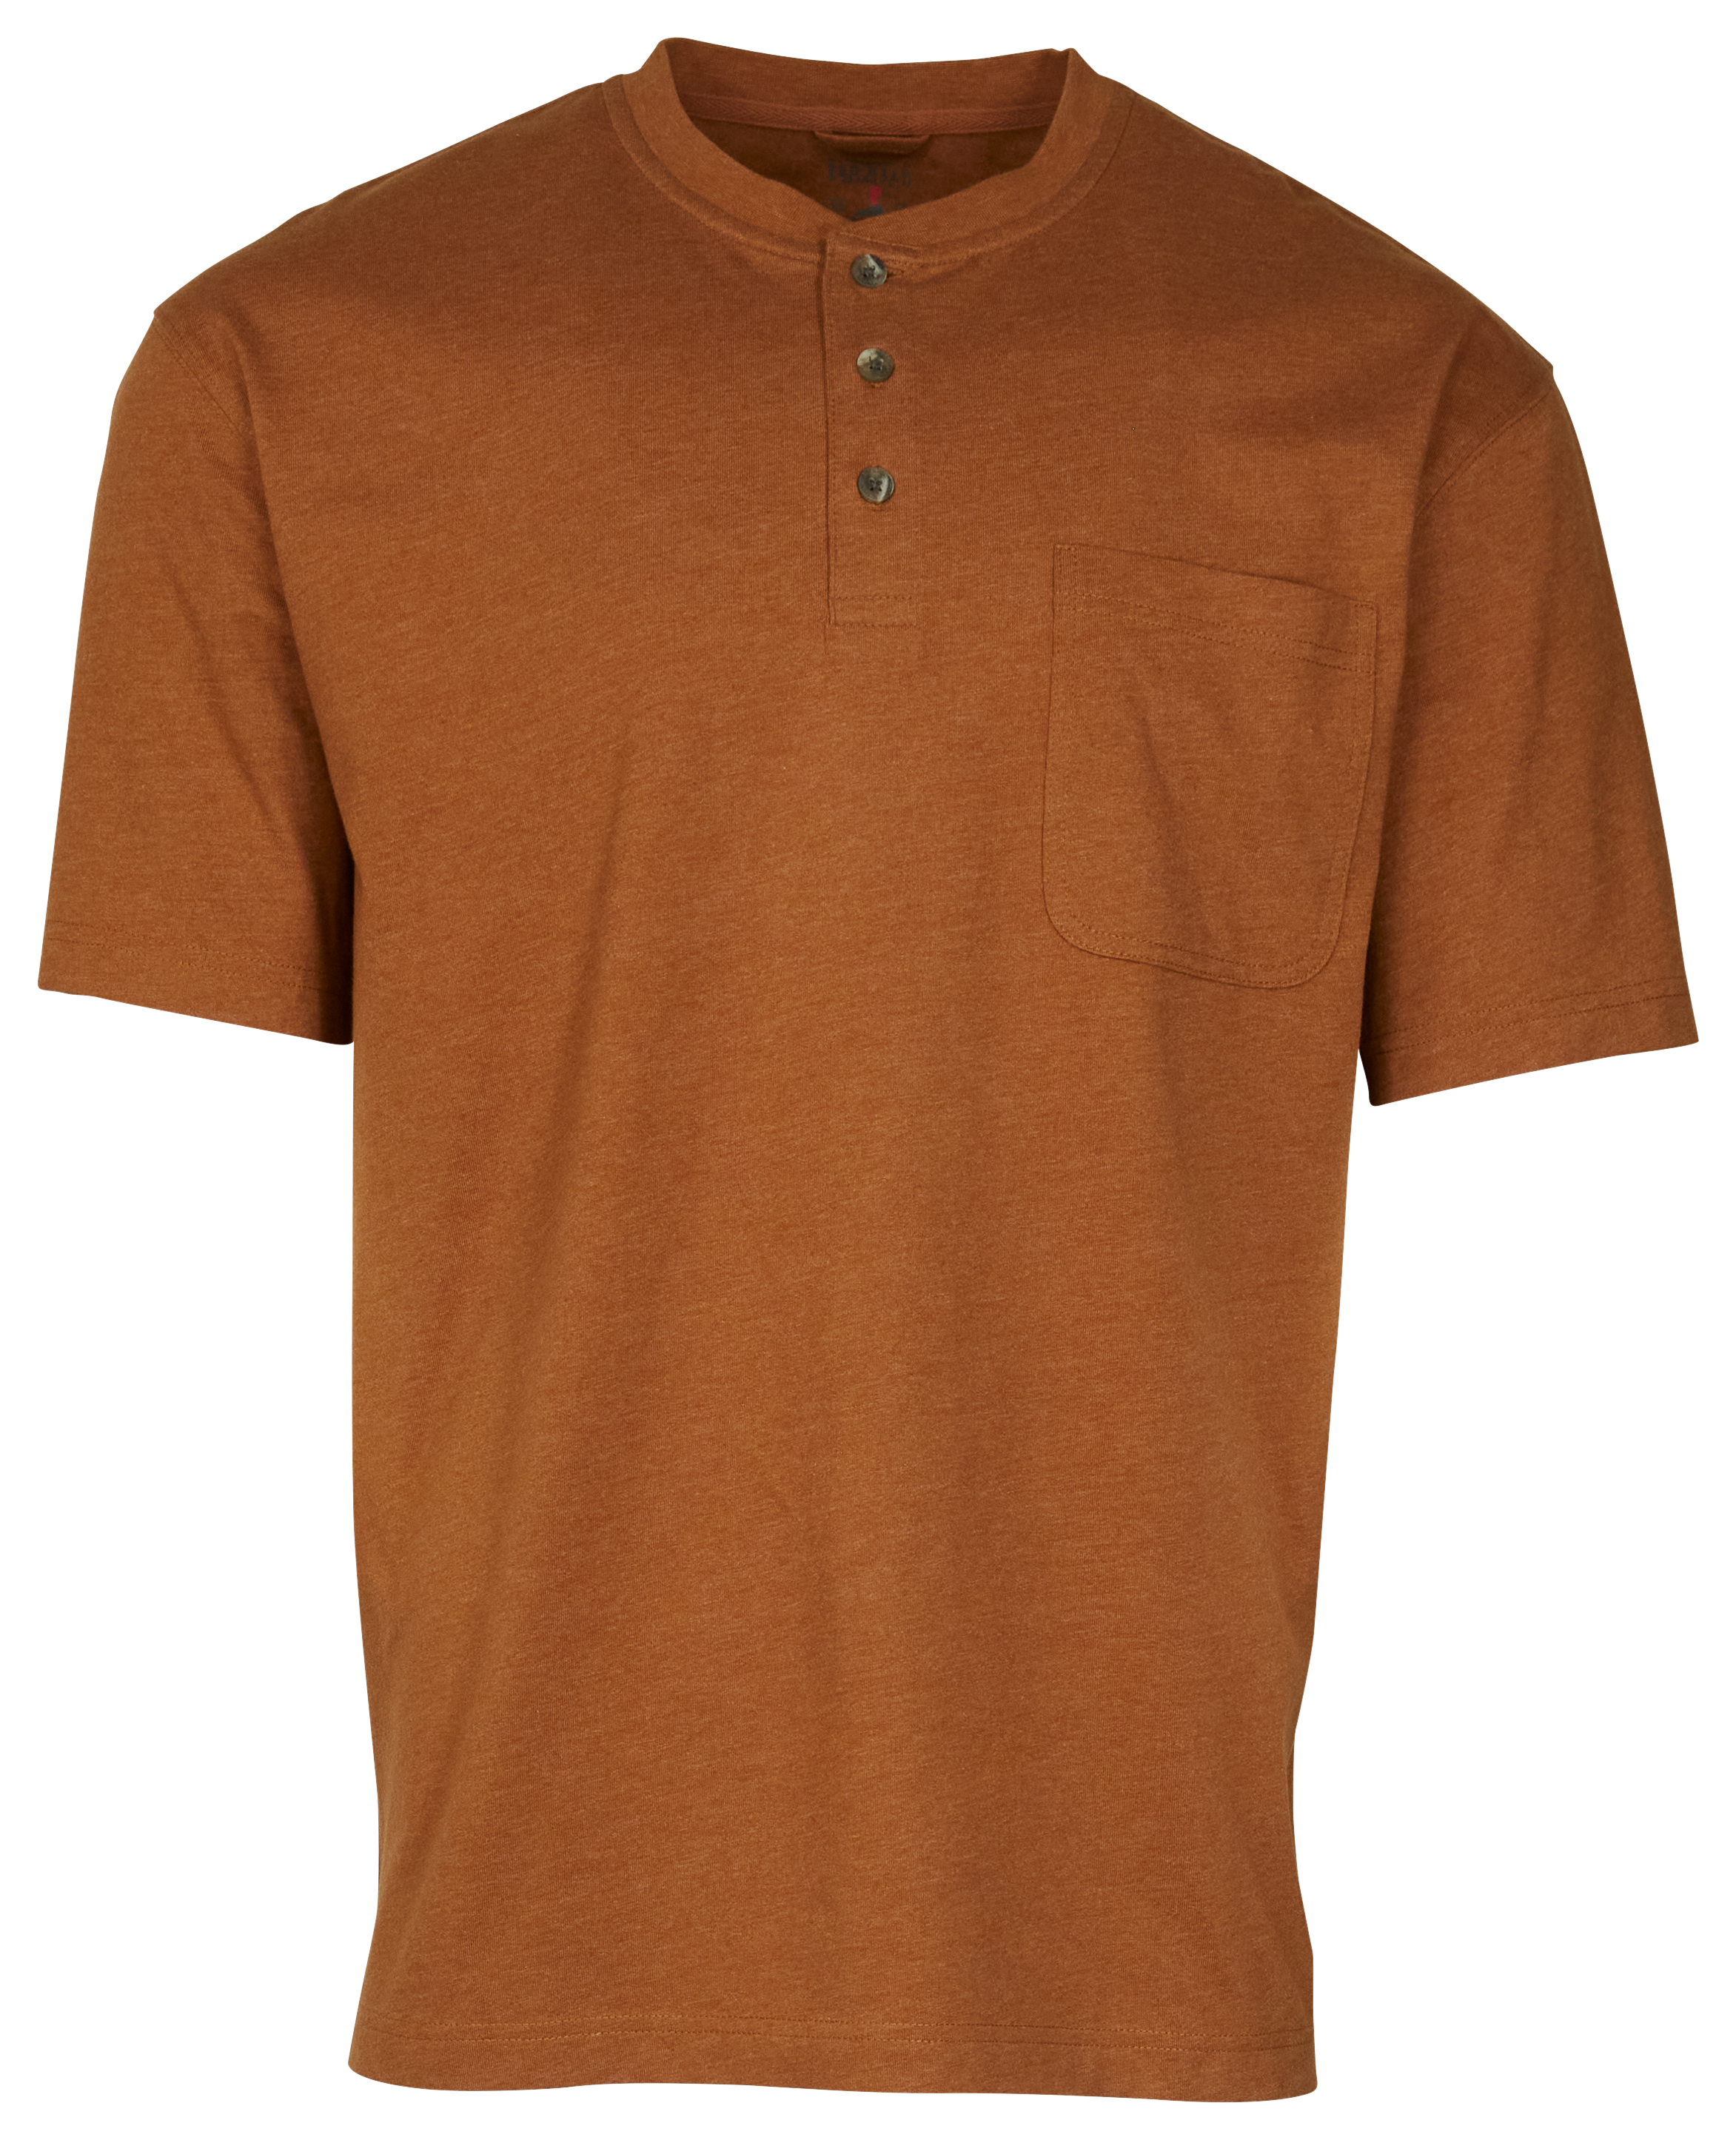 RedHead Henley Pocket Short-Sleeve Shirt for Men - Bronze Heather - LT